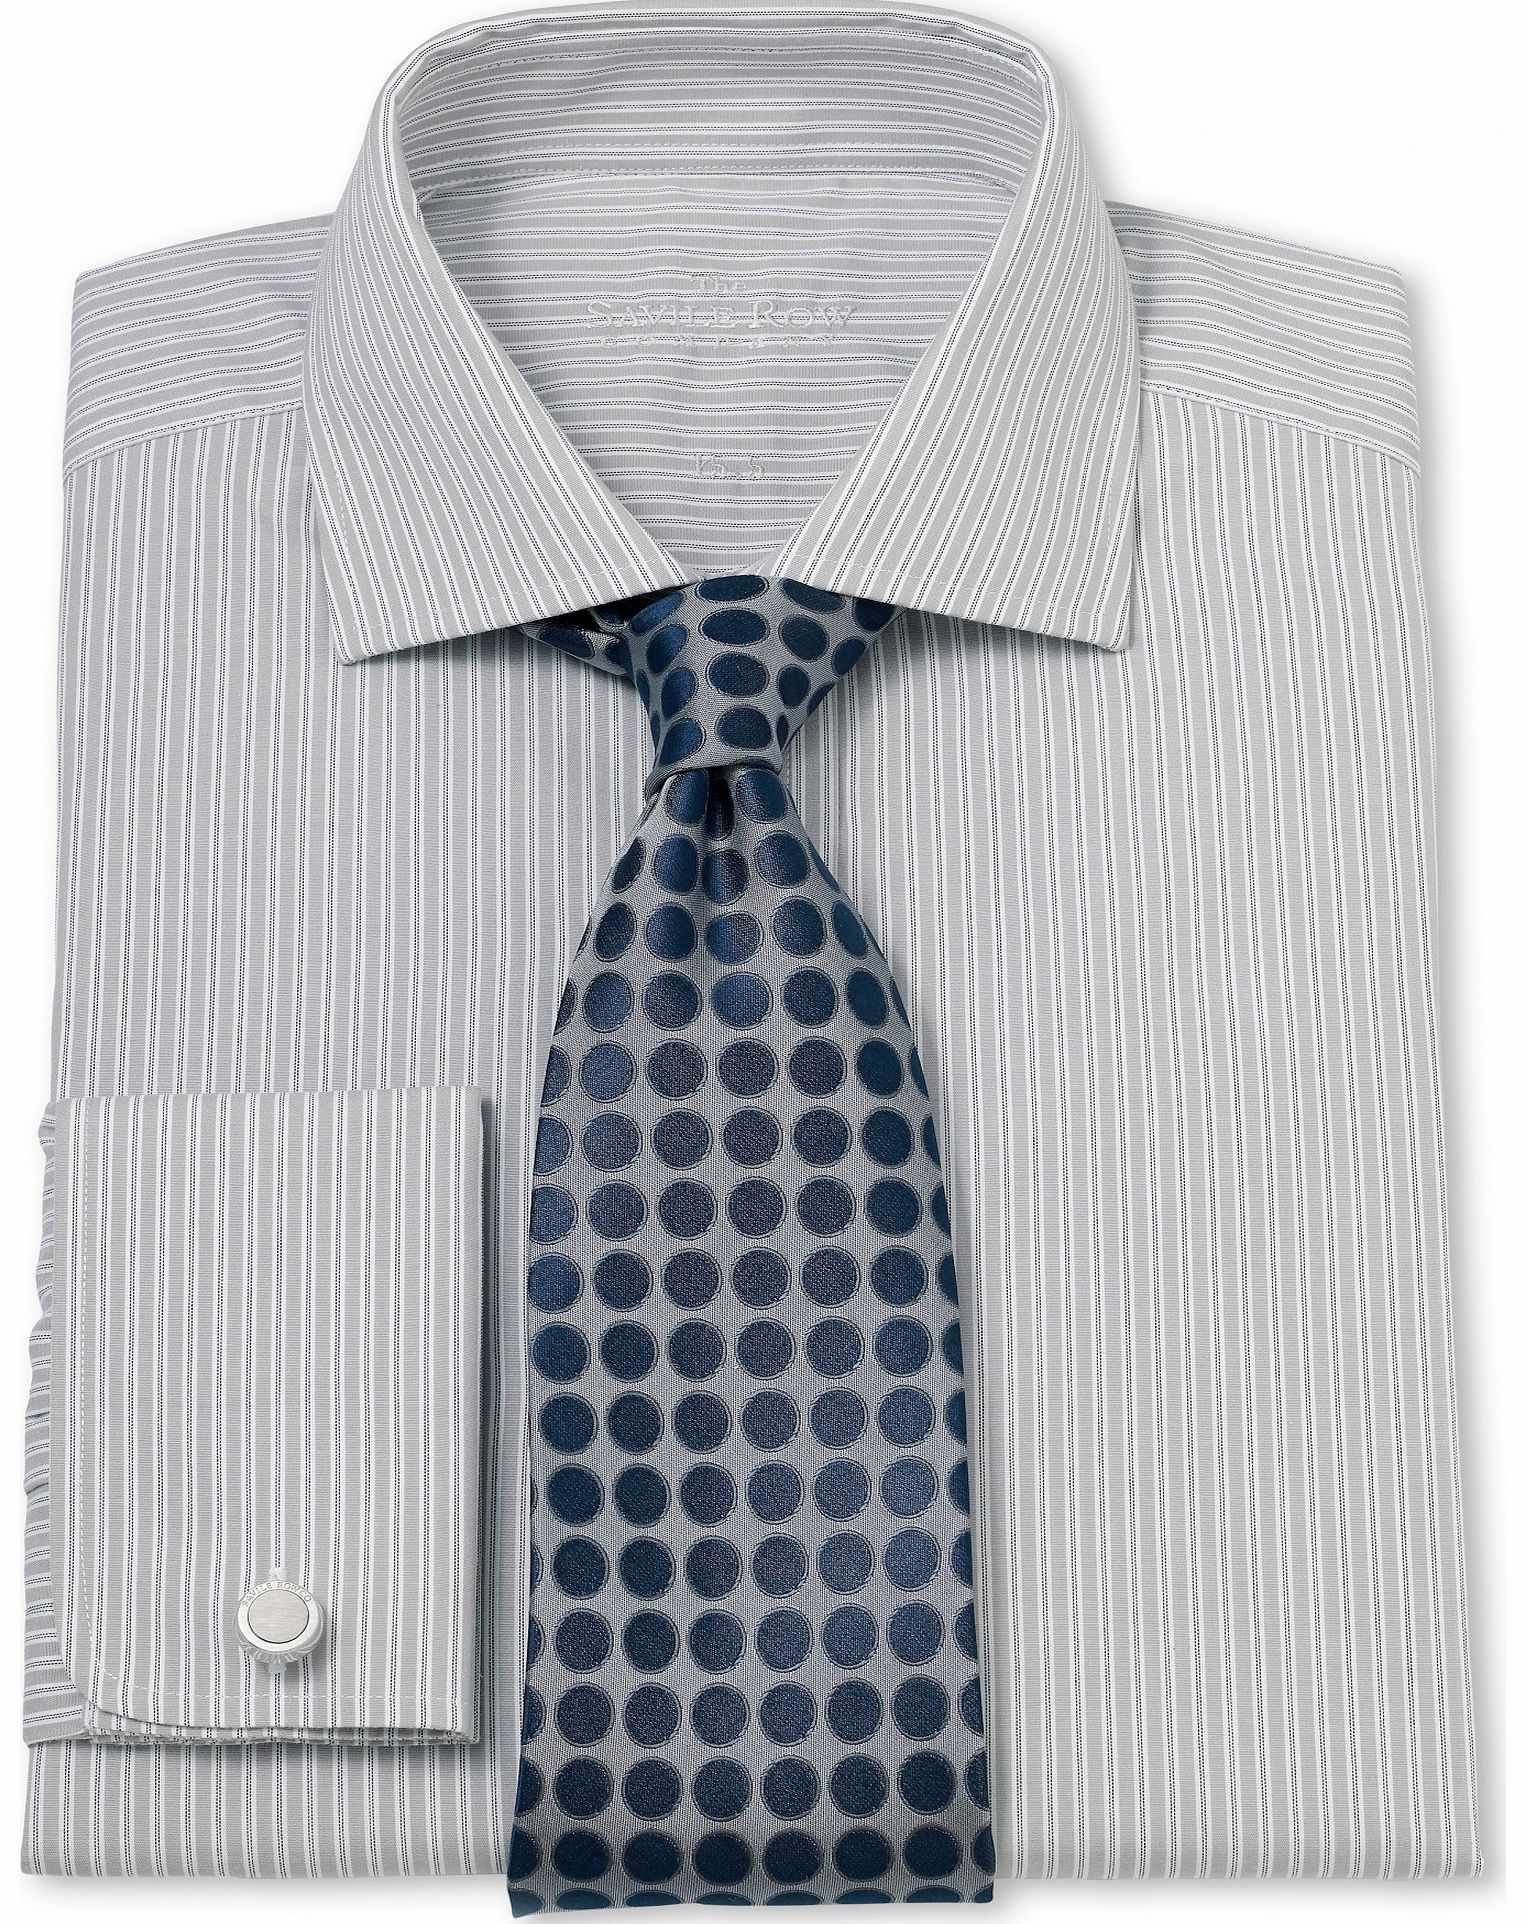 Savile Row Company Grey White Stripe Slim Fit Shirt 16`` Lengthened